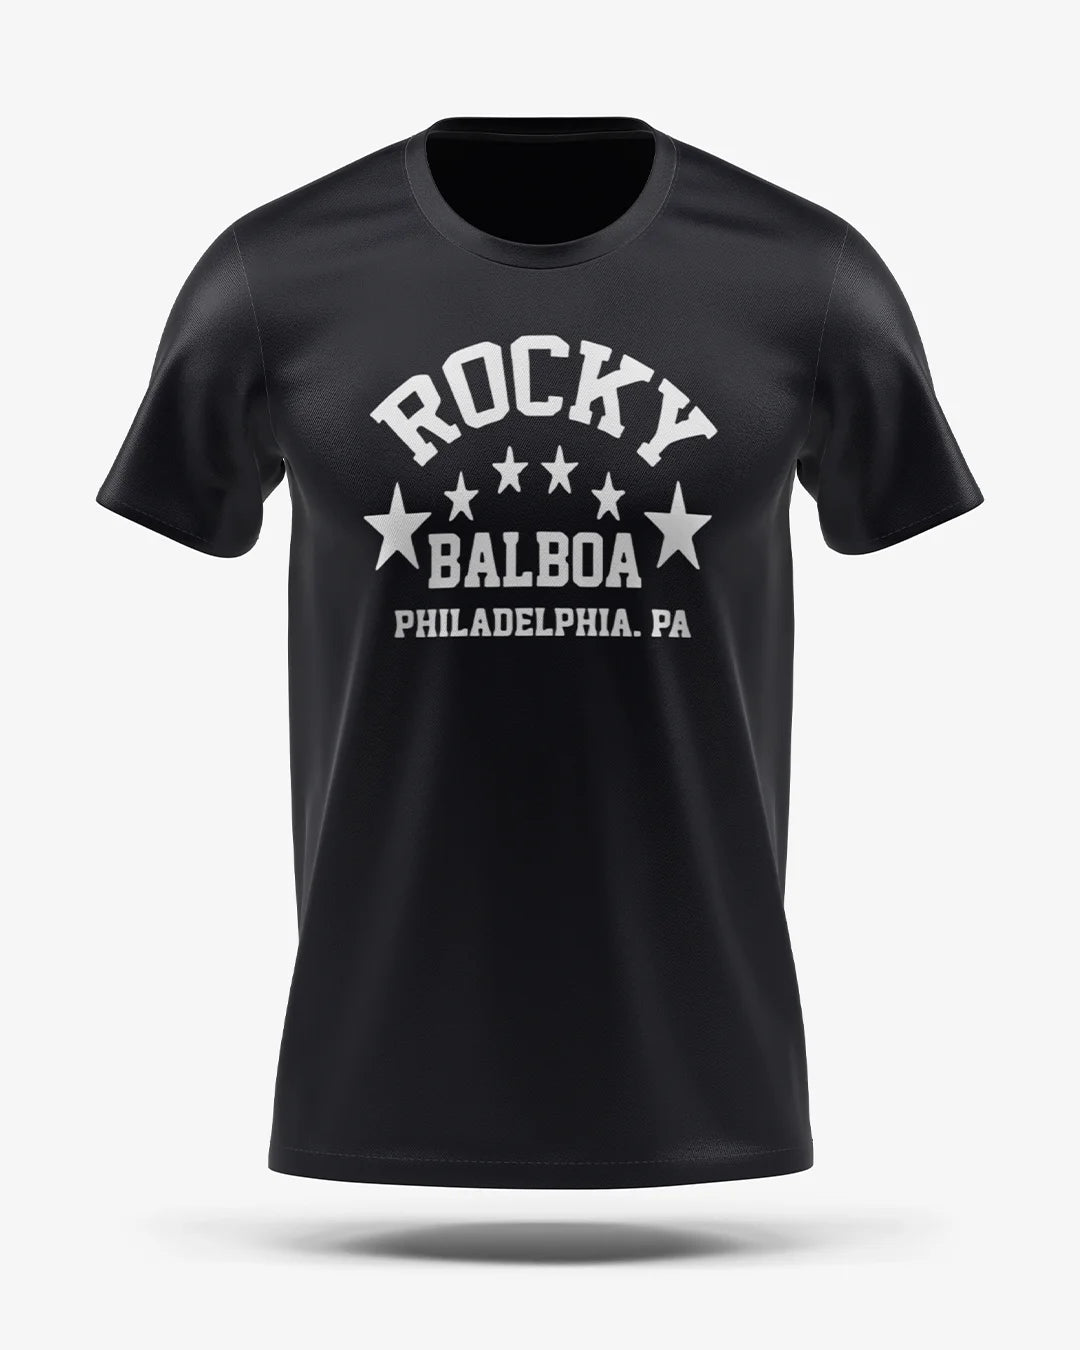 Camiseta Esporte Dry Fit - Rocky Balboa Star